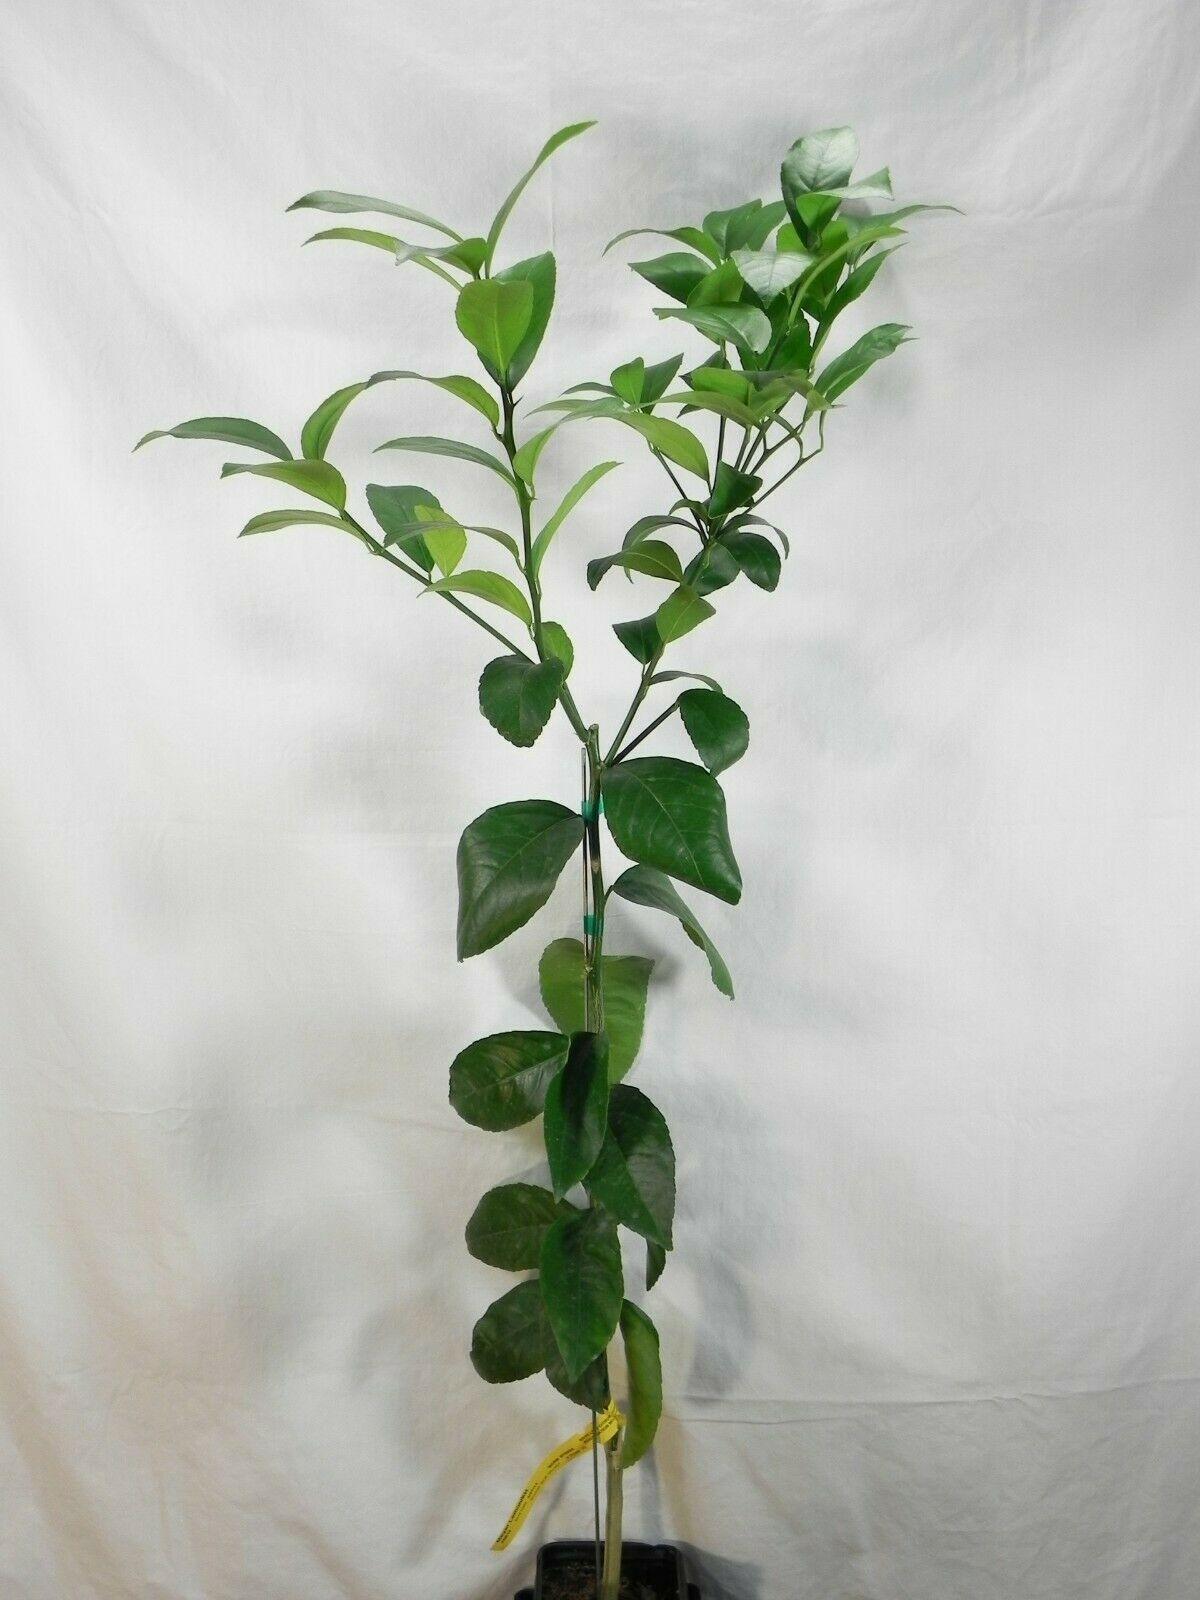 Dwarf Sanbokan Lemon Tree - 26-30" Tall - Live Grafted Citrus Plant - Gallon Pot - The Nursery Center